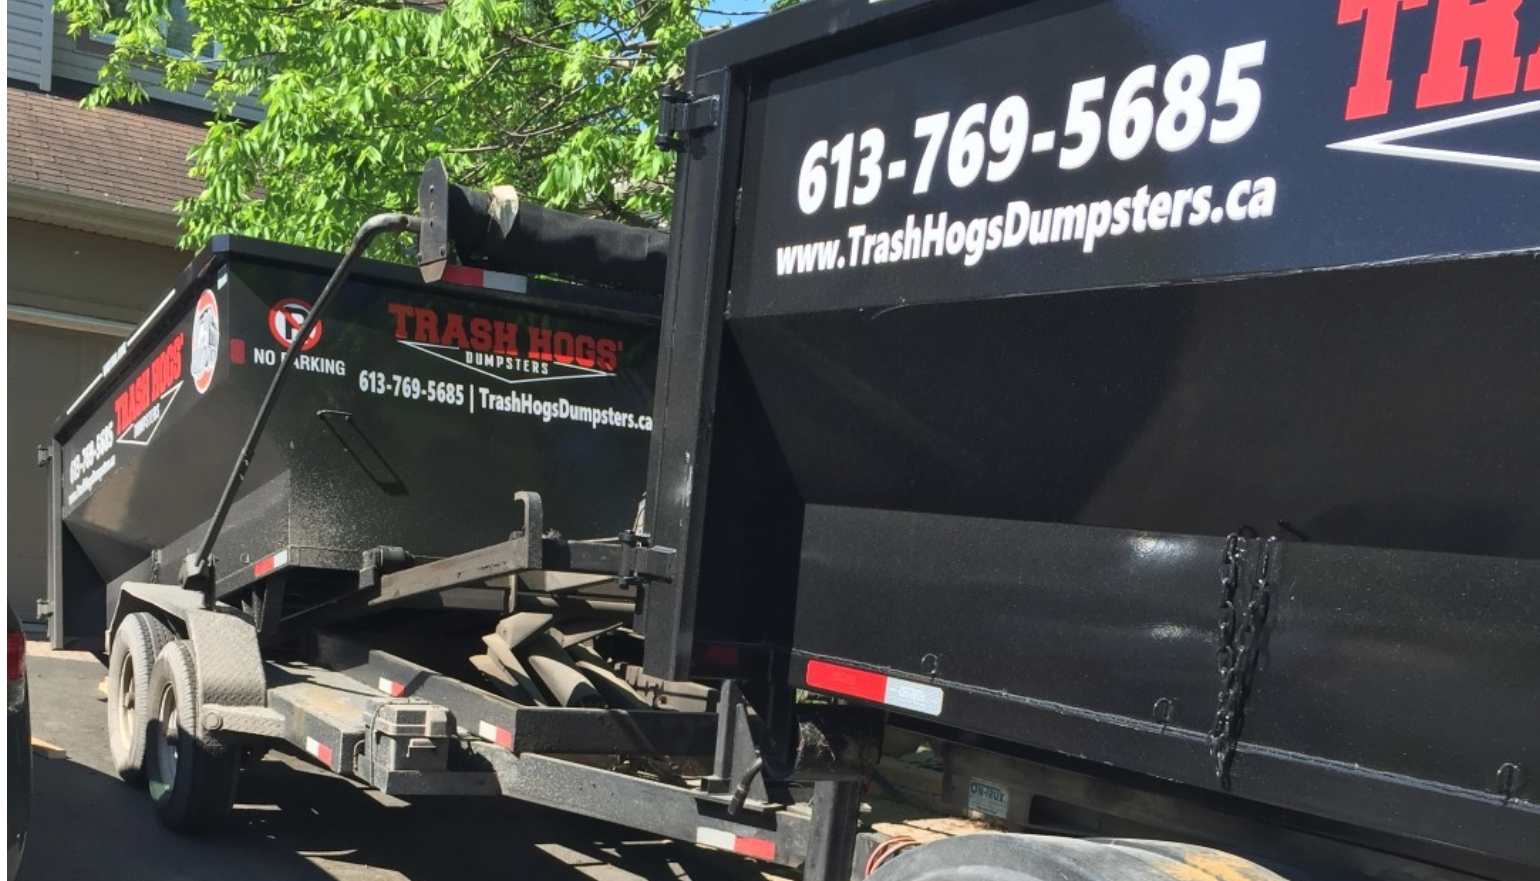 trash-hogs-dumpster-rentals-ottawa-dumpsters-waste